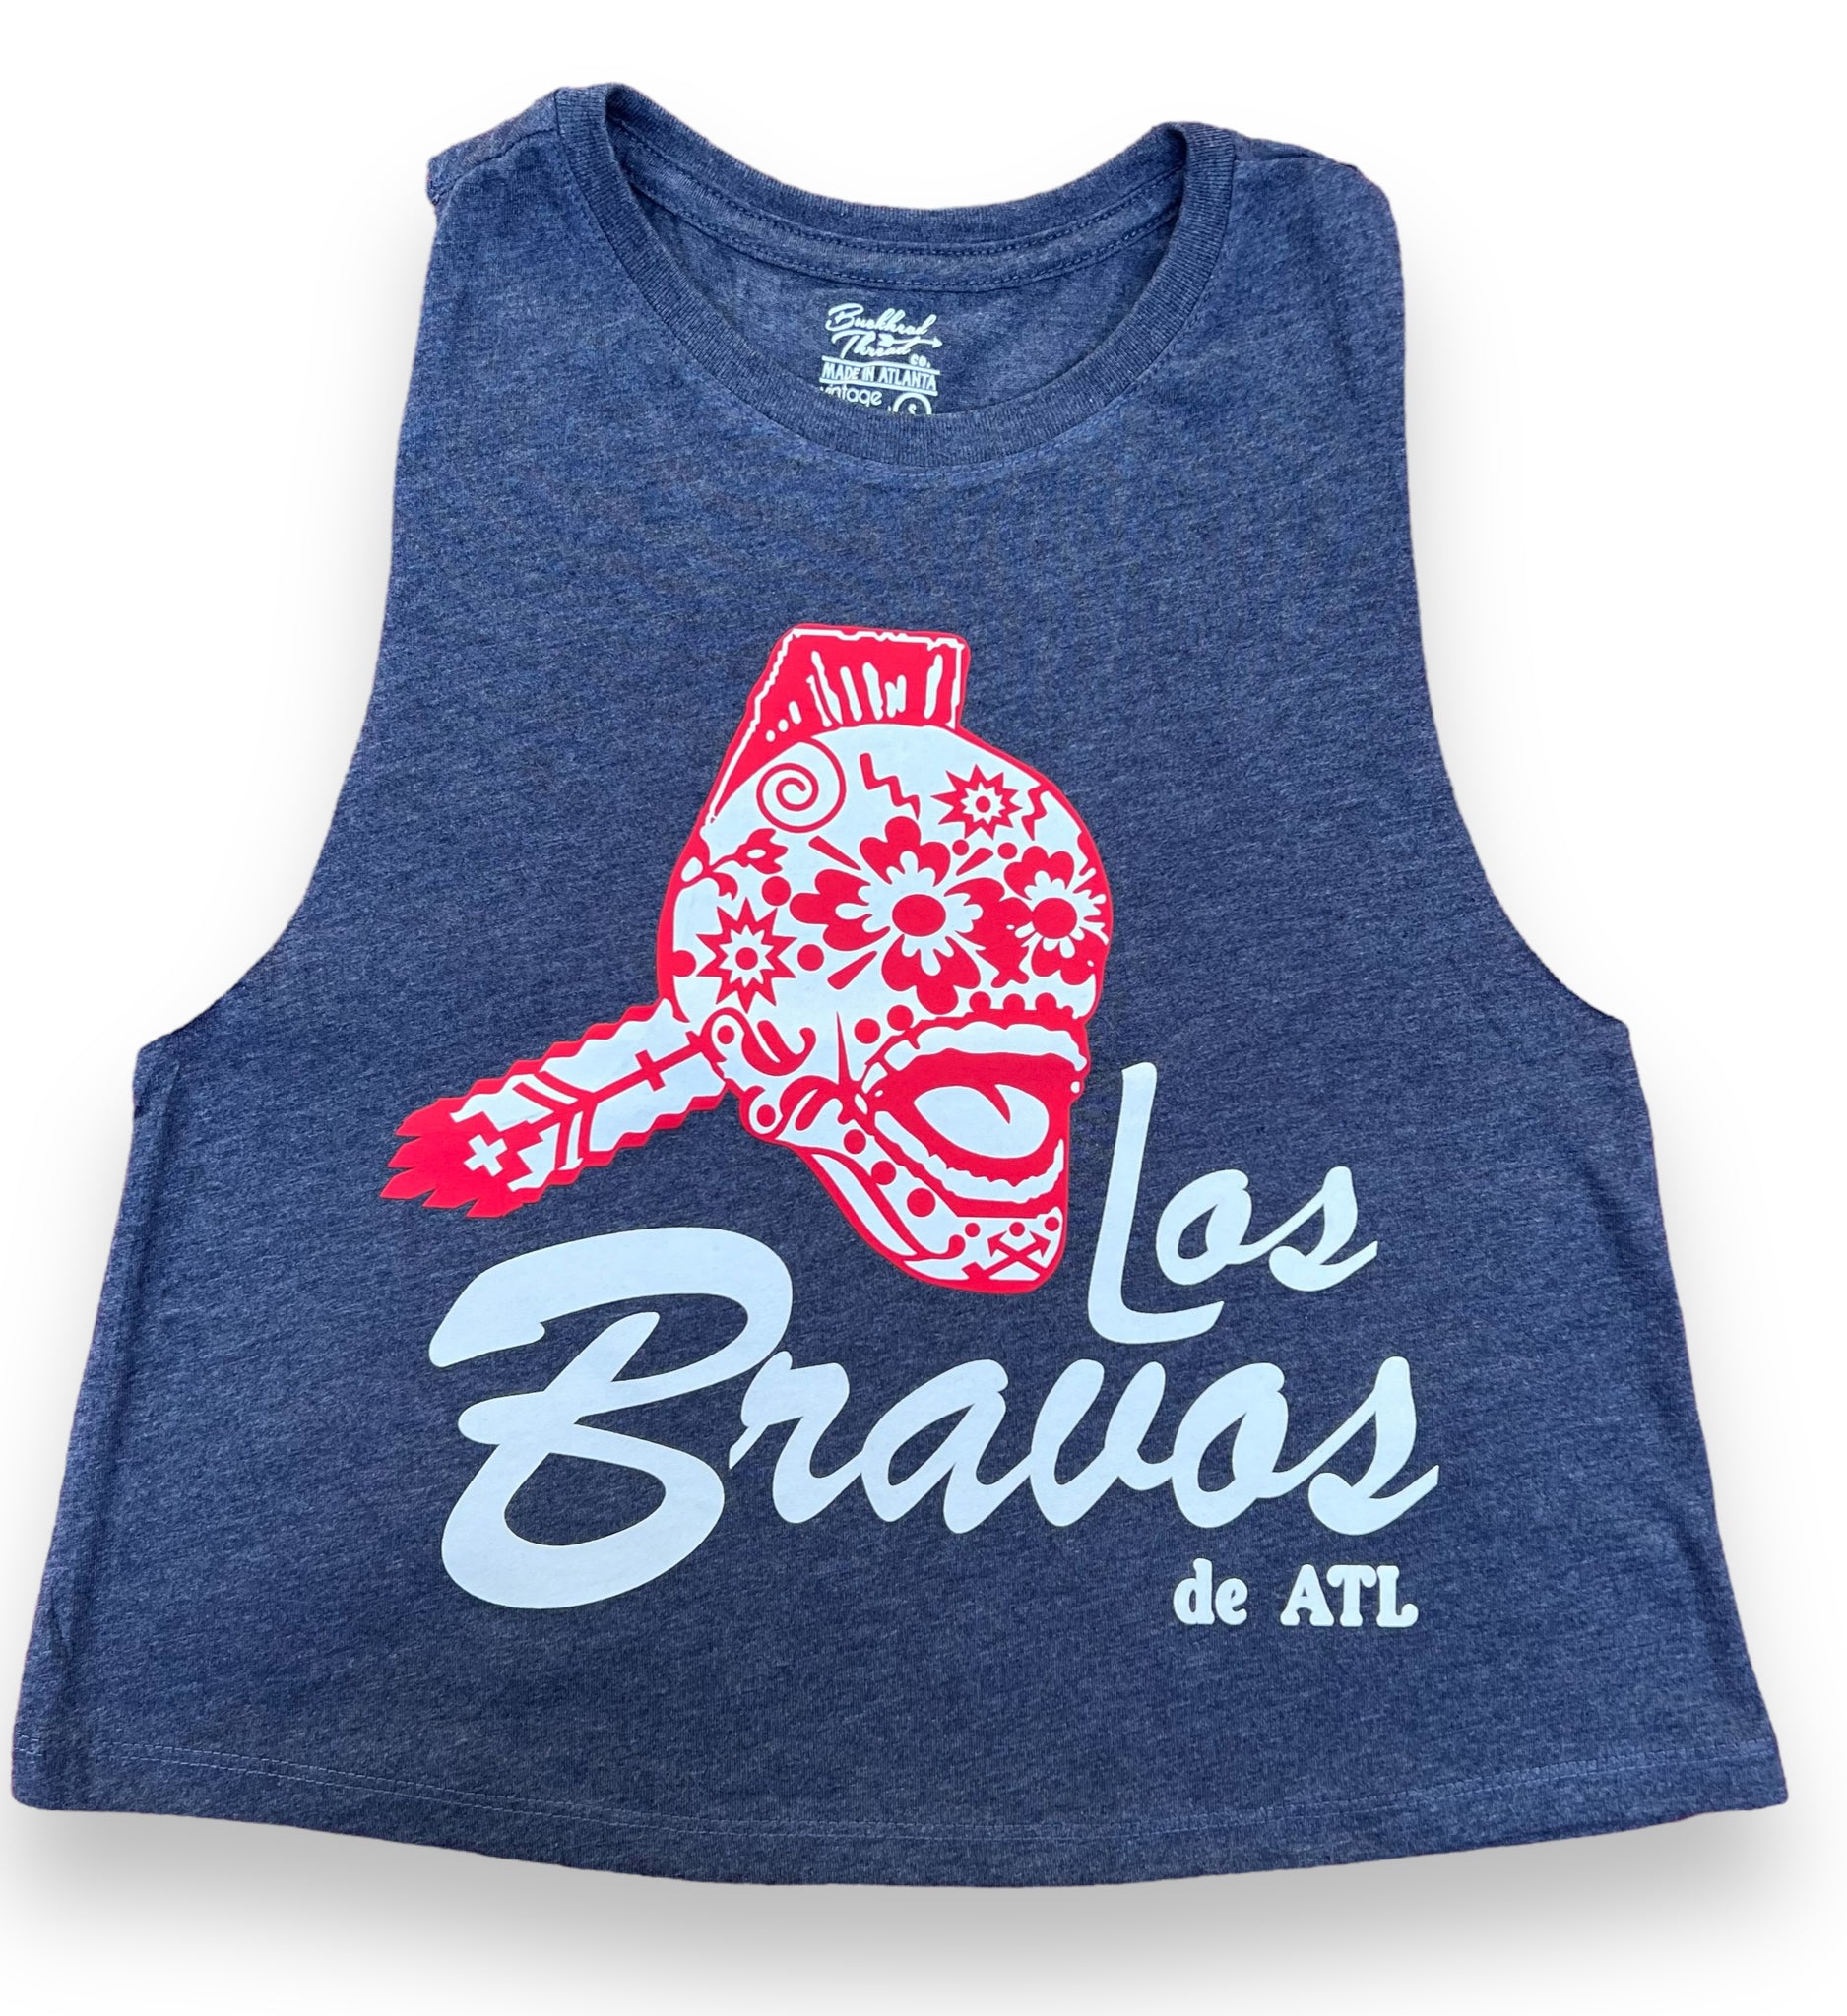 Los Bravos de ATL Atlanta Braves shirt, hoodie, sweatshirt and